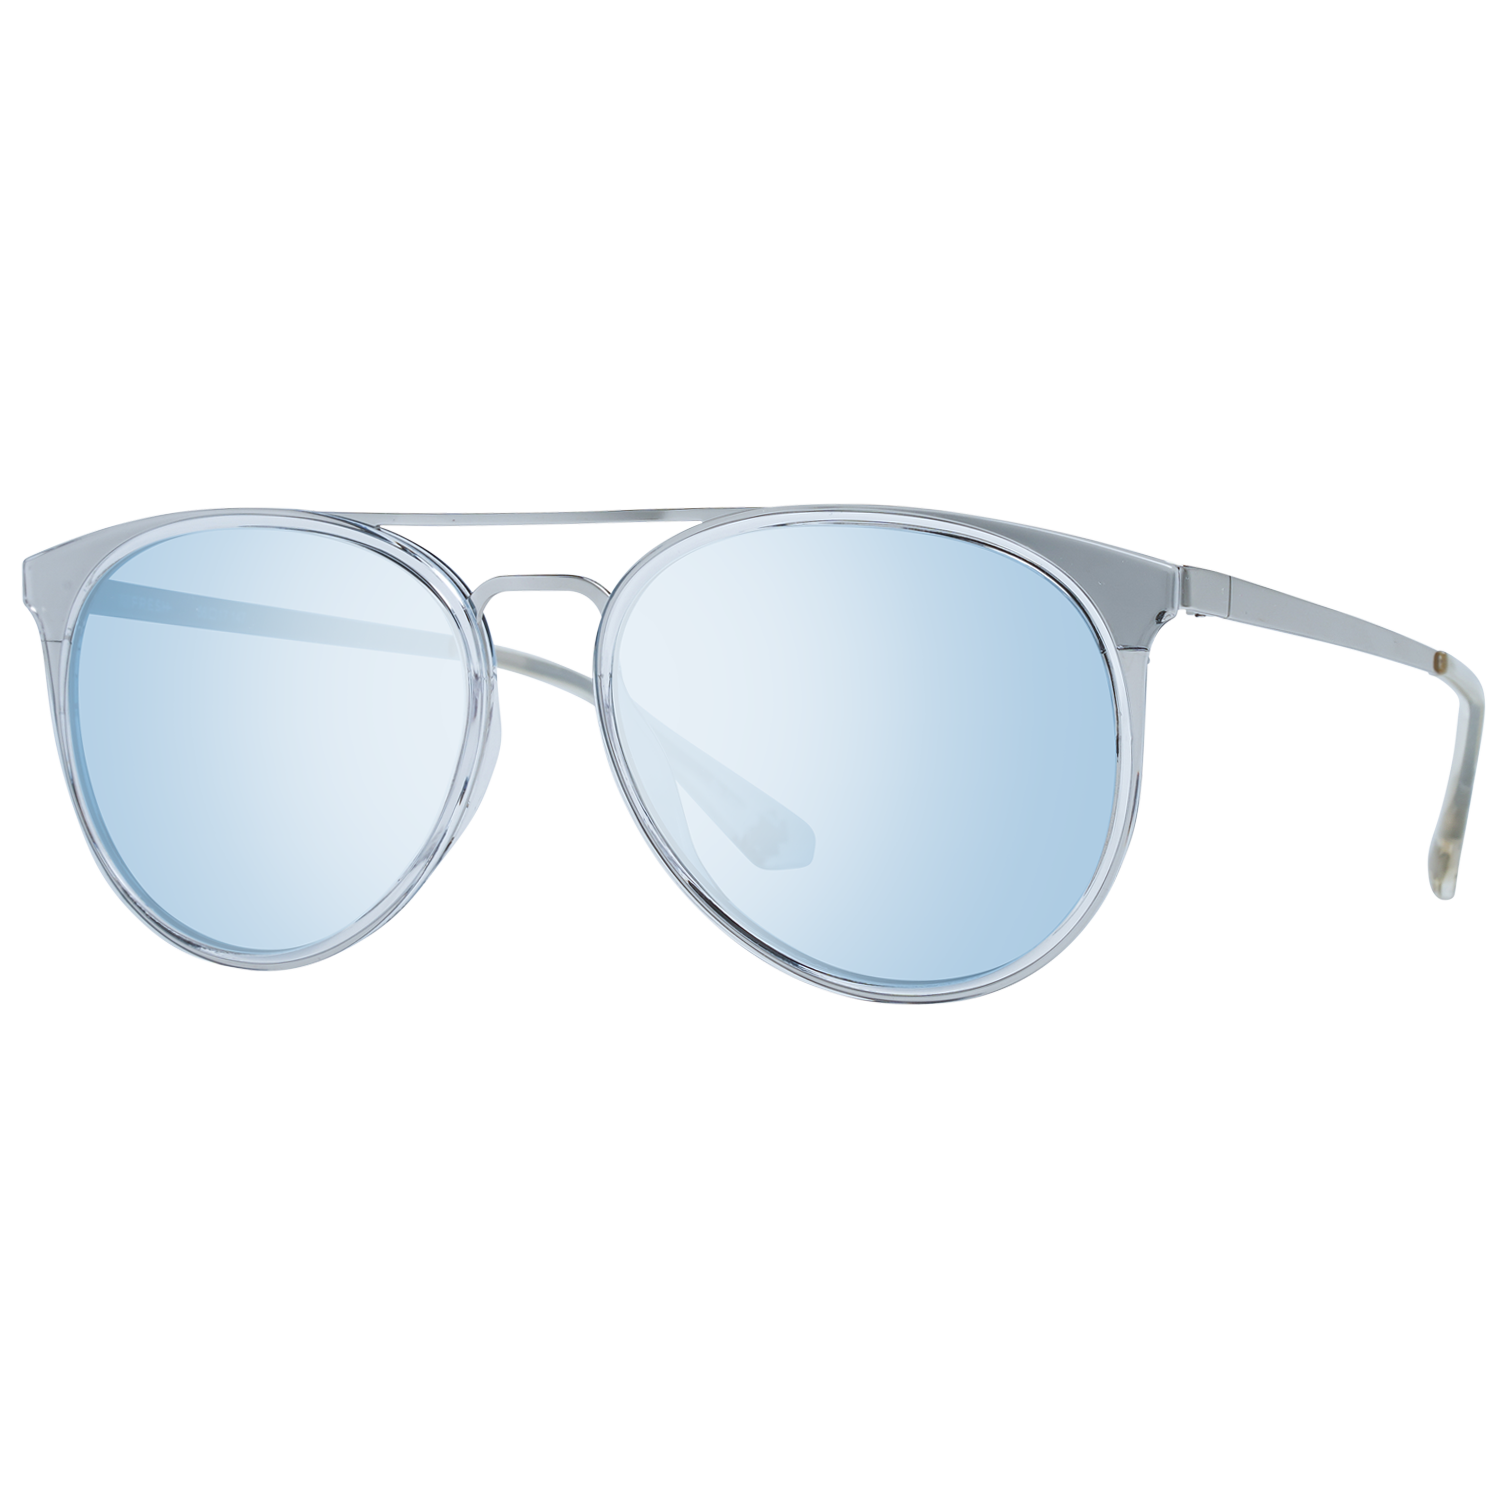 Spy Sunglasses Spy Sunglasses 6700000000056 Toddy 56 Eyeglasses Eyewear UK USA Australia 